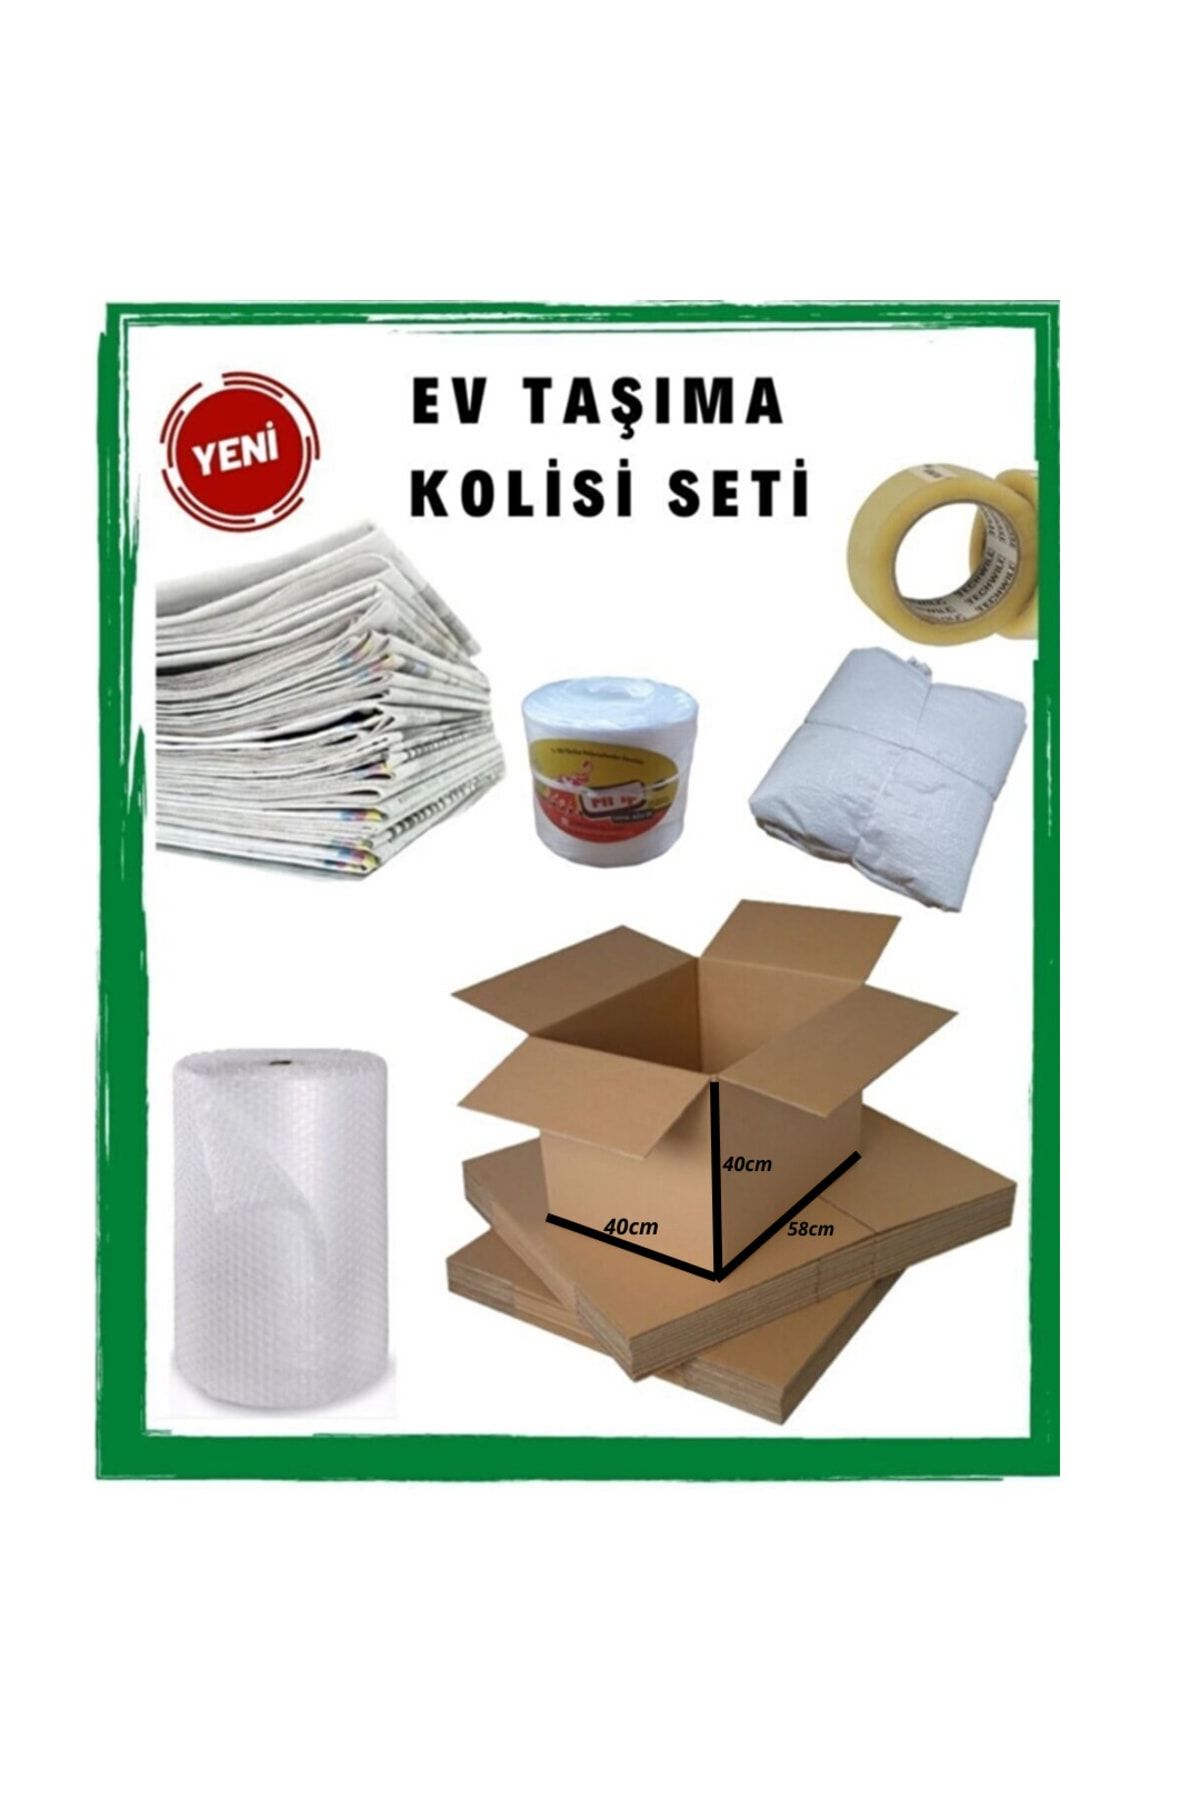 urgancıoğlu Ev Taşıma Kolisi Taşınma Kolisi Set Paketleme Seti 40x58x40 Koli